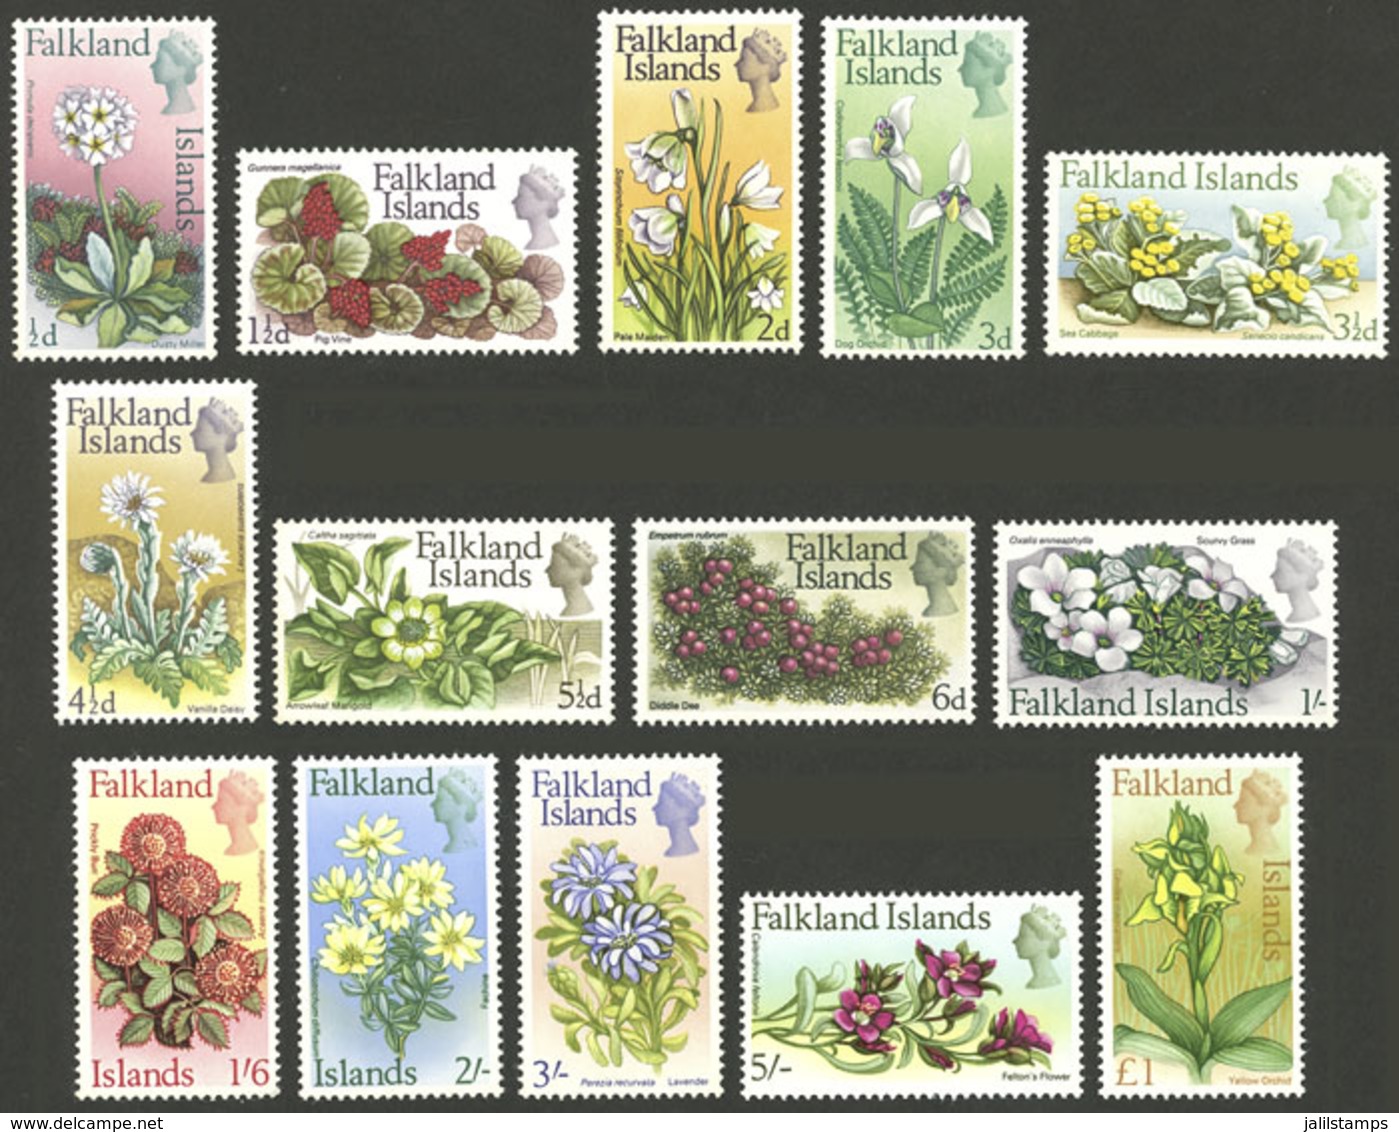 FALKLAND ISLANDS/MALVINAS: Yvert 160/173, 1968 Flowers, Cmpl. Set Of 14 MNH Values, Excellent Quality! - Falkland Islands